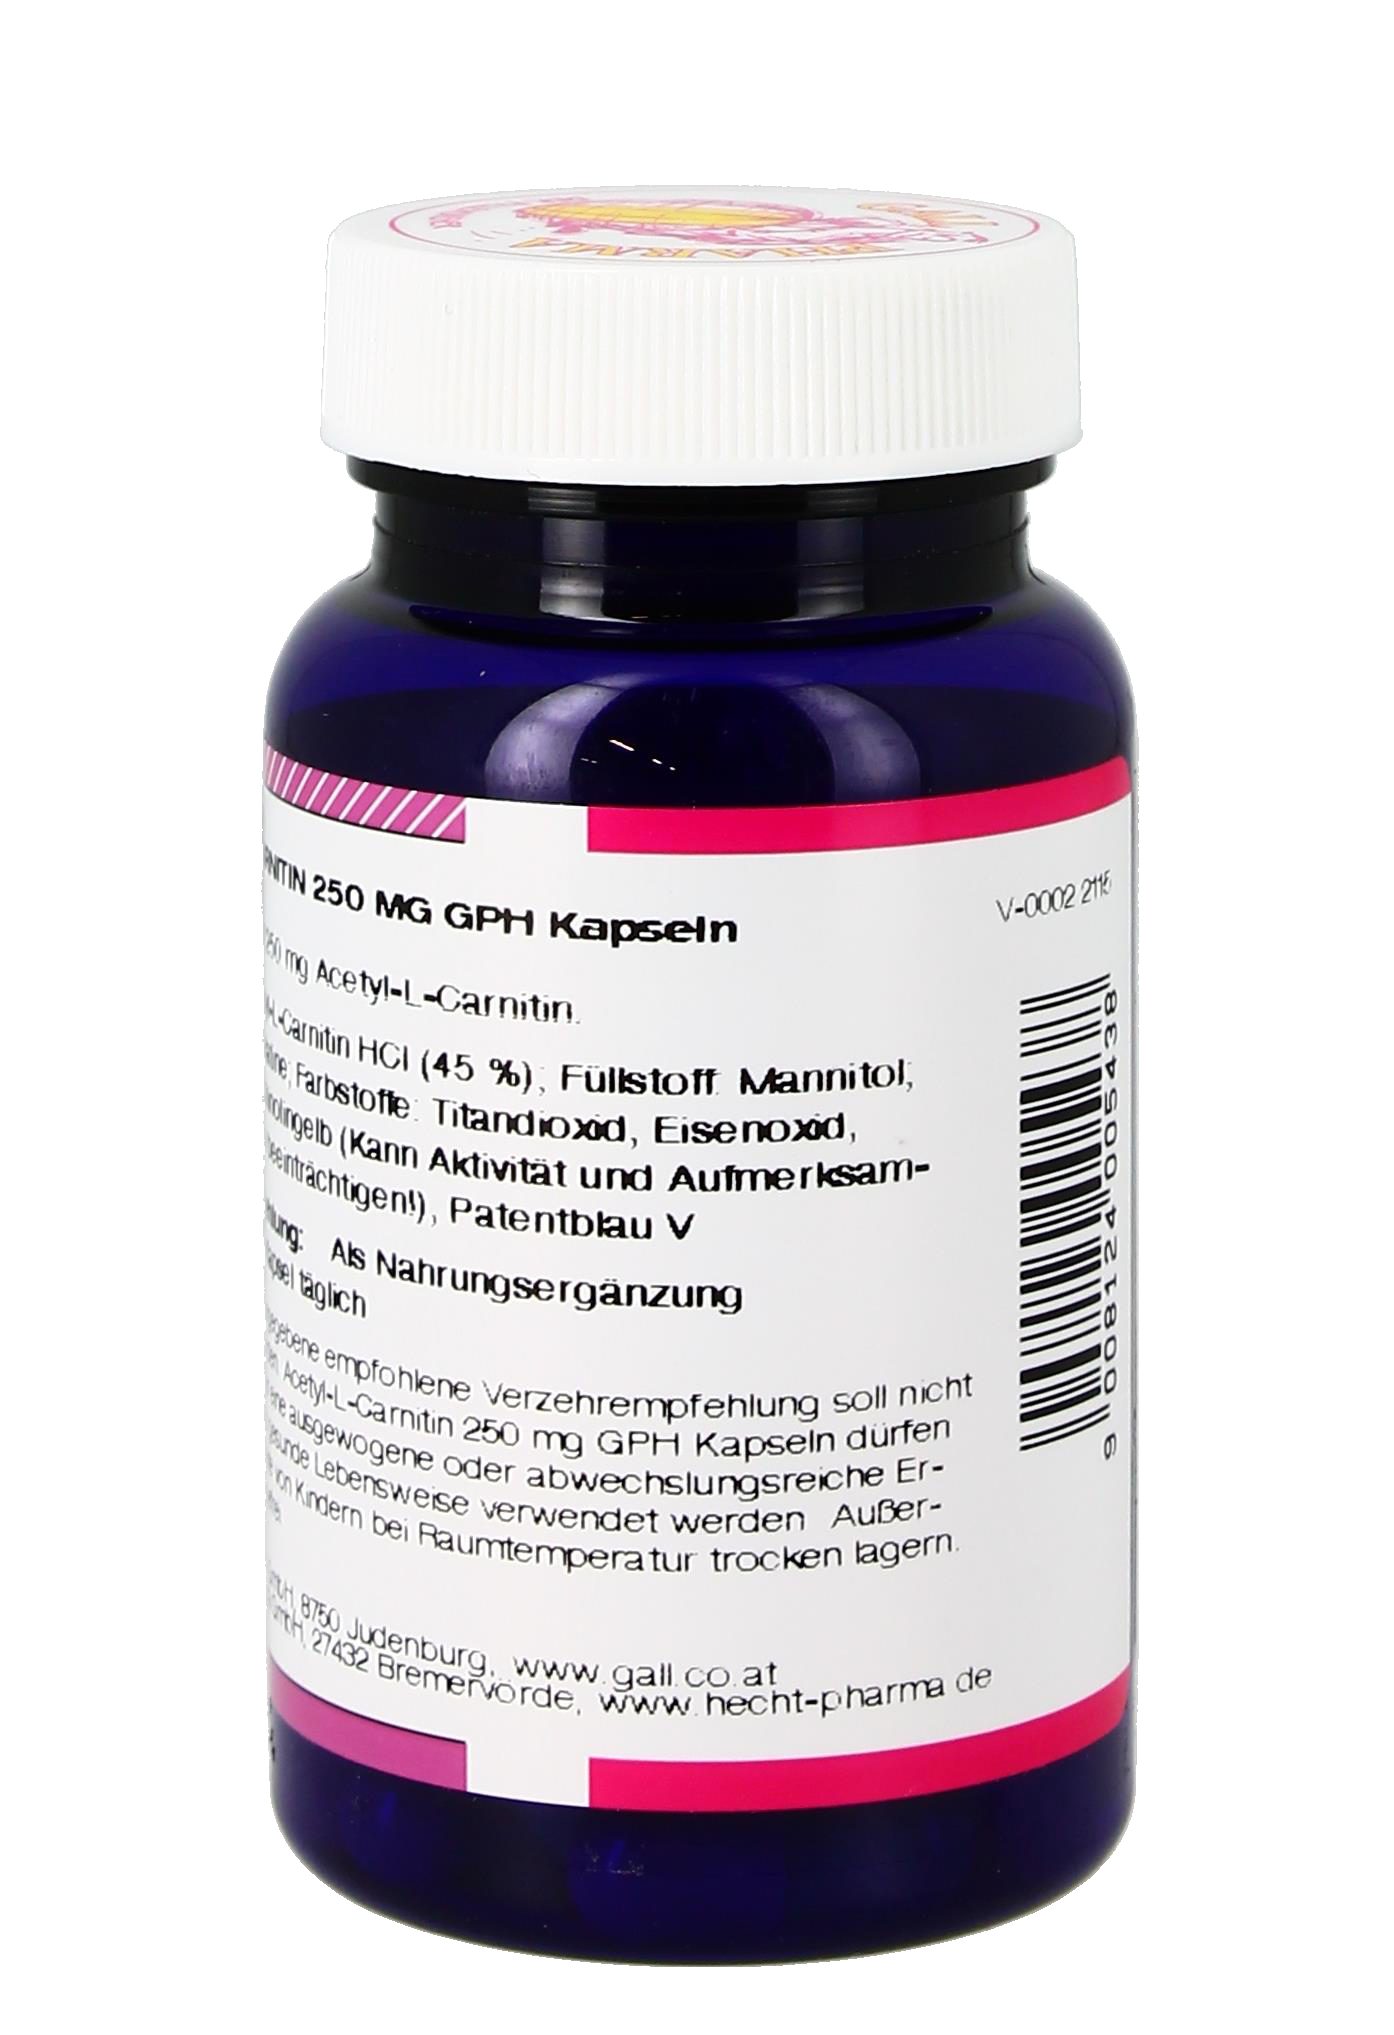 Acetyl-L-Carnitin 250 mg Kapseln 30 St.